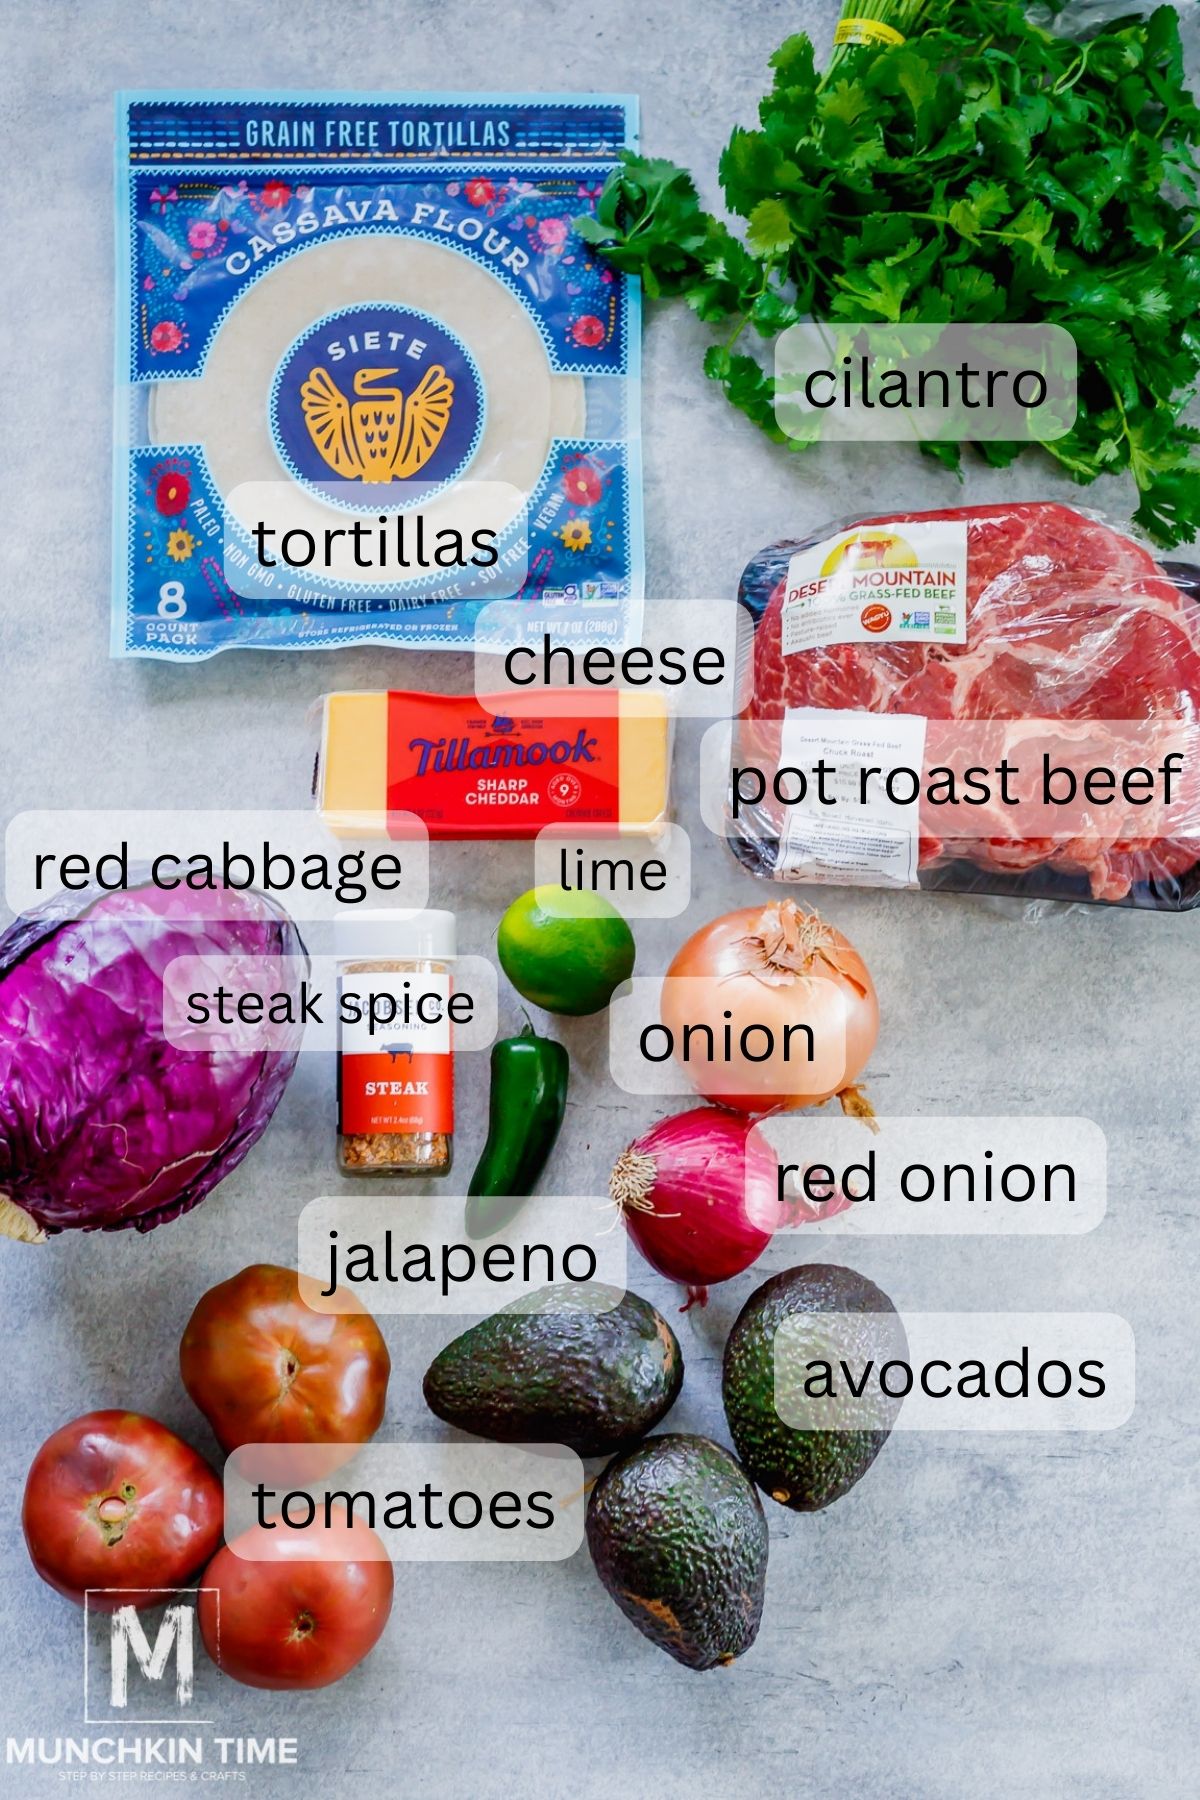 Ingredients for Guacamole Beef Pot Roast Tacos.